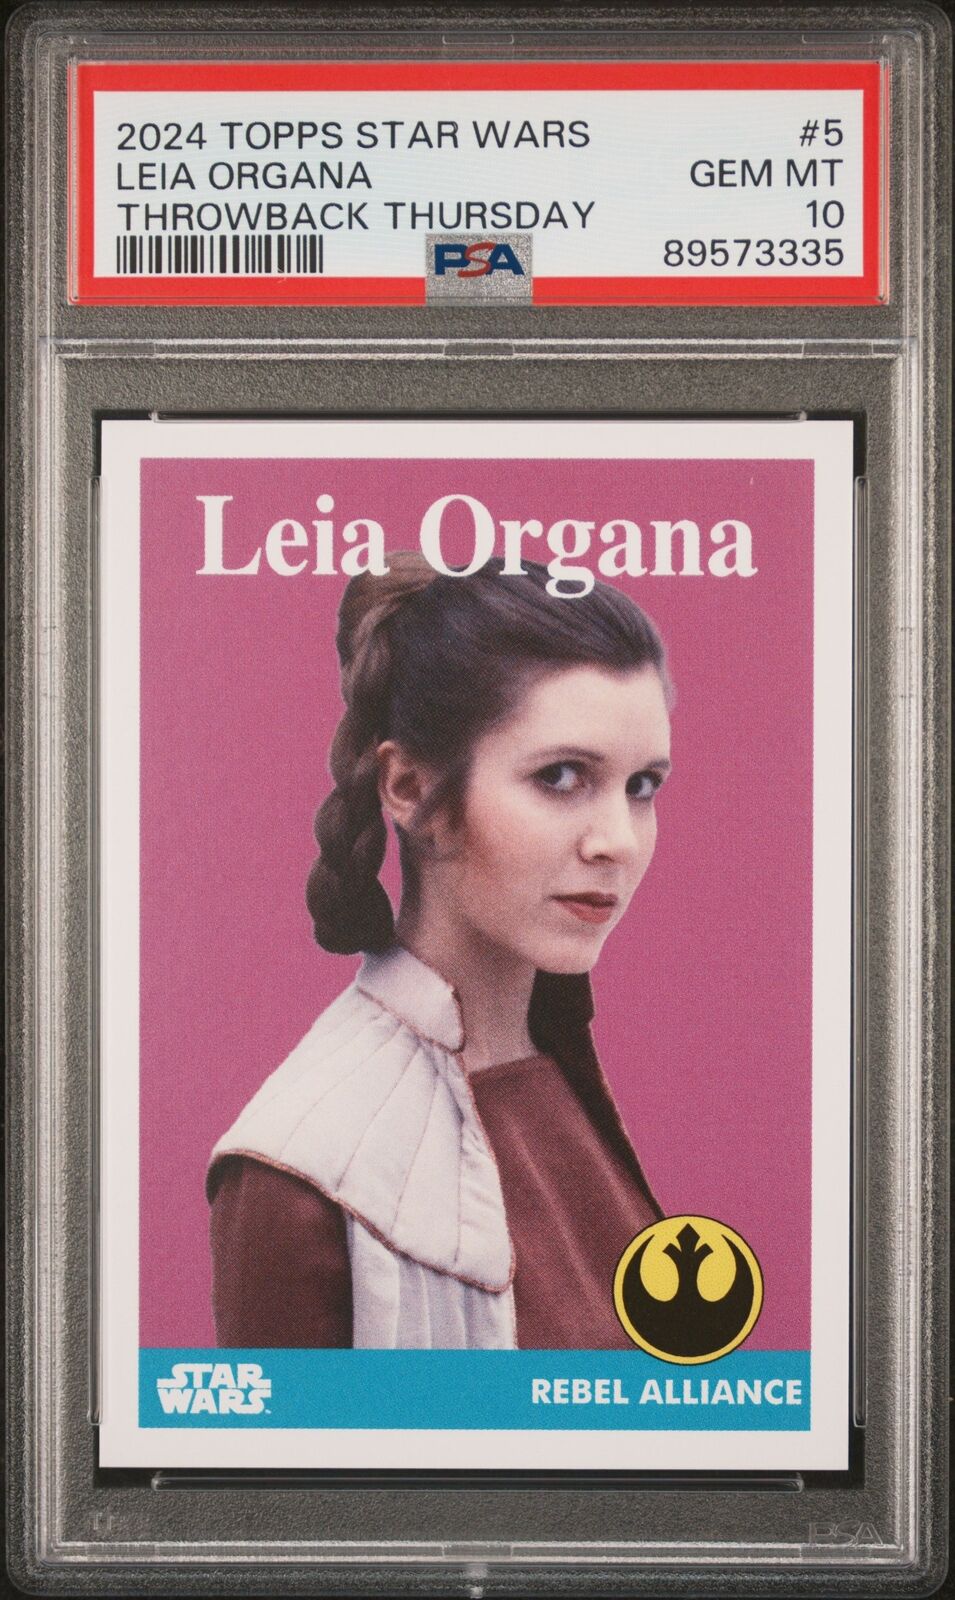 2024 Topps Star Wars Throwback Thursday Leia Organa #5 PSA 10